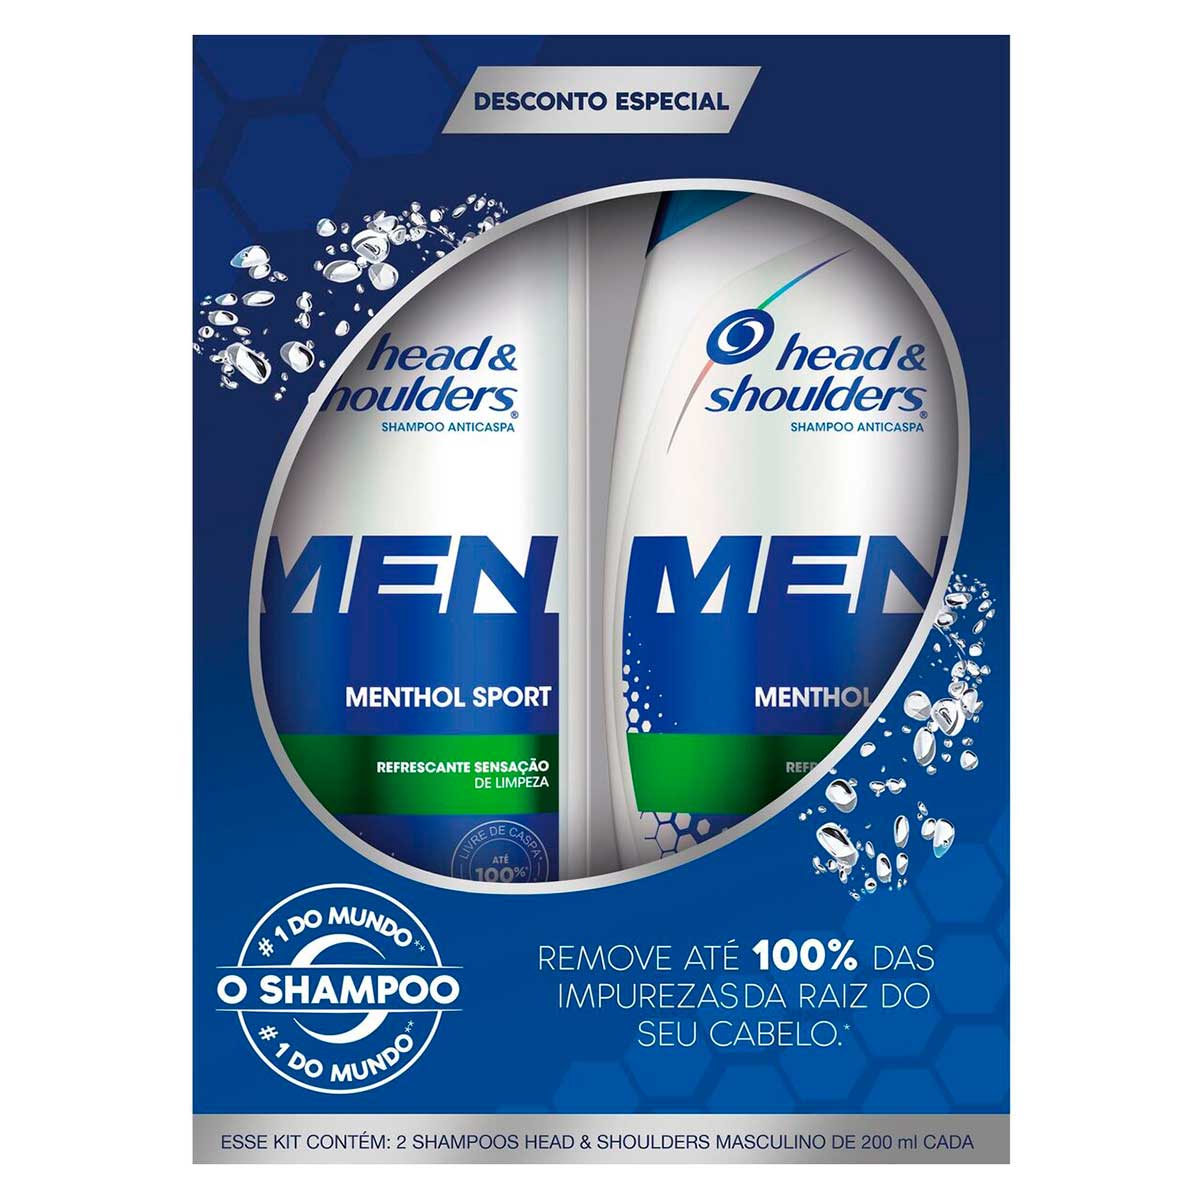 shampoo-anticaspa-menthol-sport-head-&-shoulders-men-frasco-2-unidades-200-ml-1.jpg